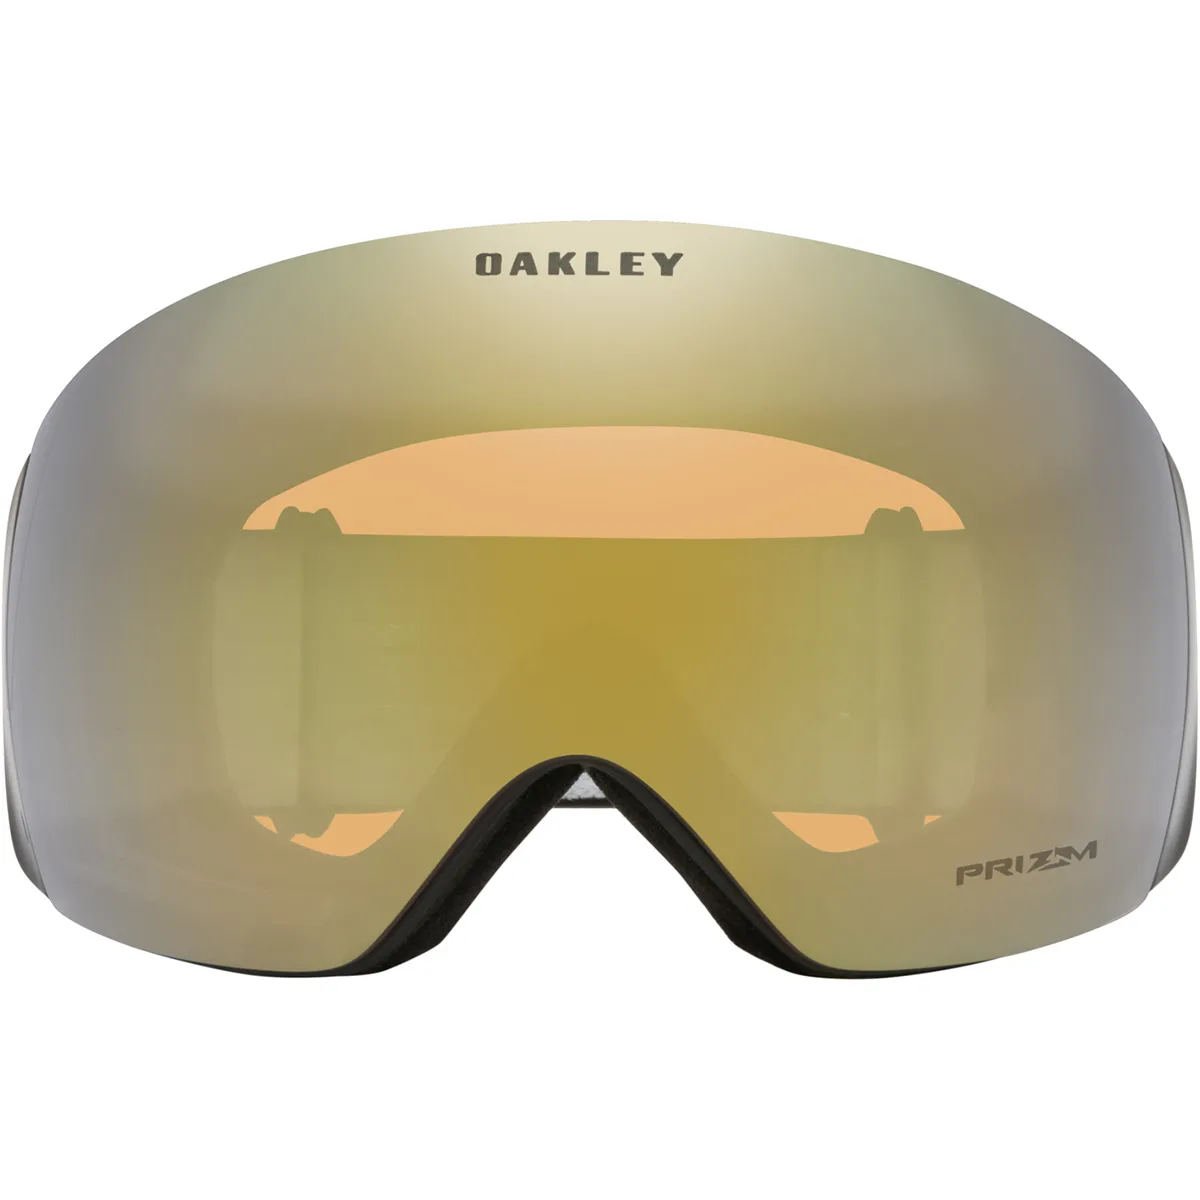 Oakley Flight Deck M goggle matte black / Prizm sage gold